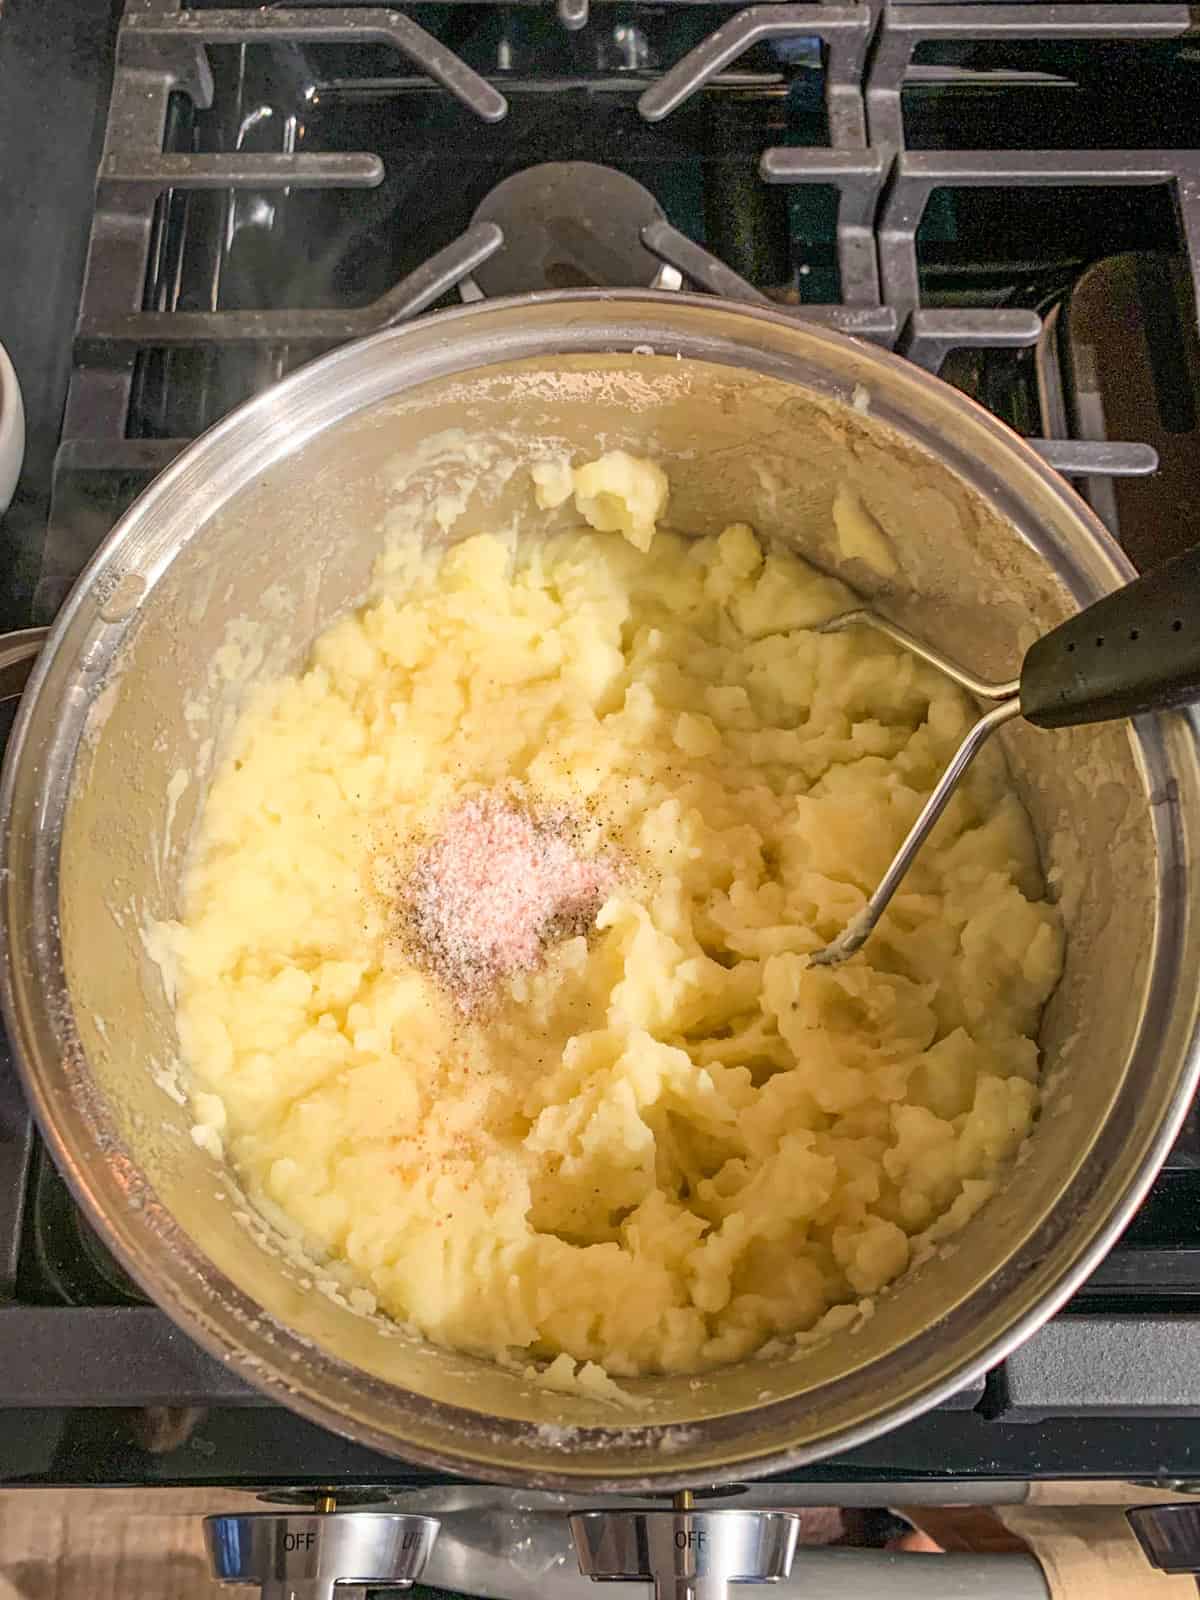 Mashing the yukon golds with a potato masher.